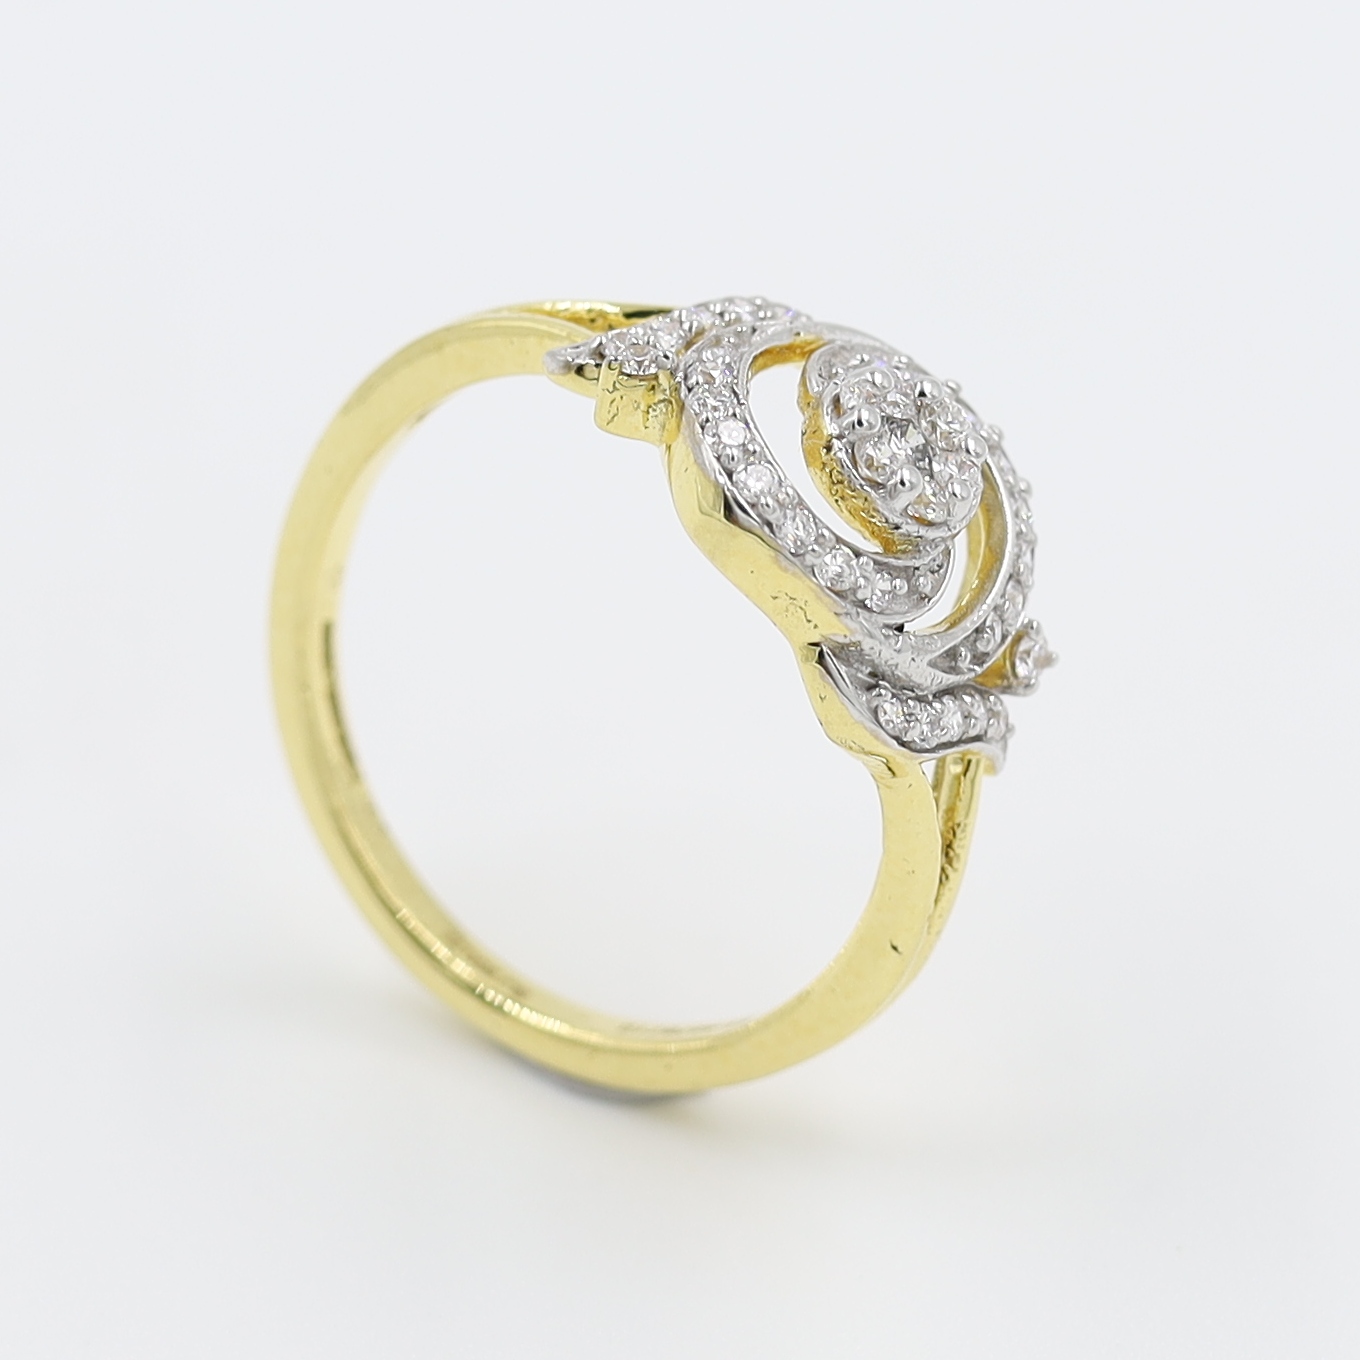 18Kt Yellow Gold Diamond Ring With Pressure Diamond Work